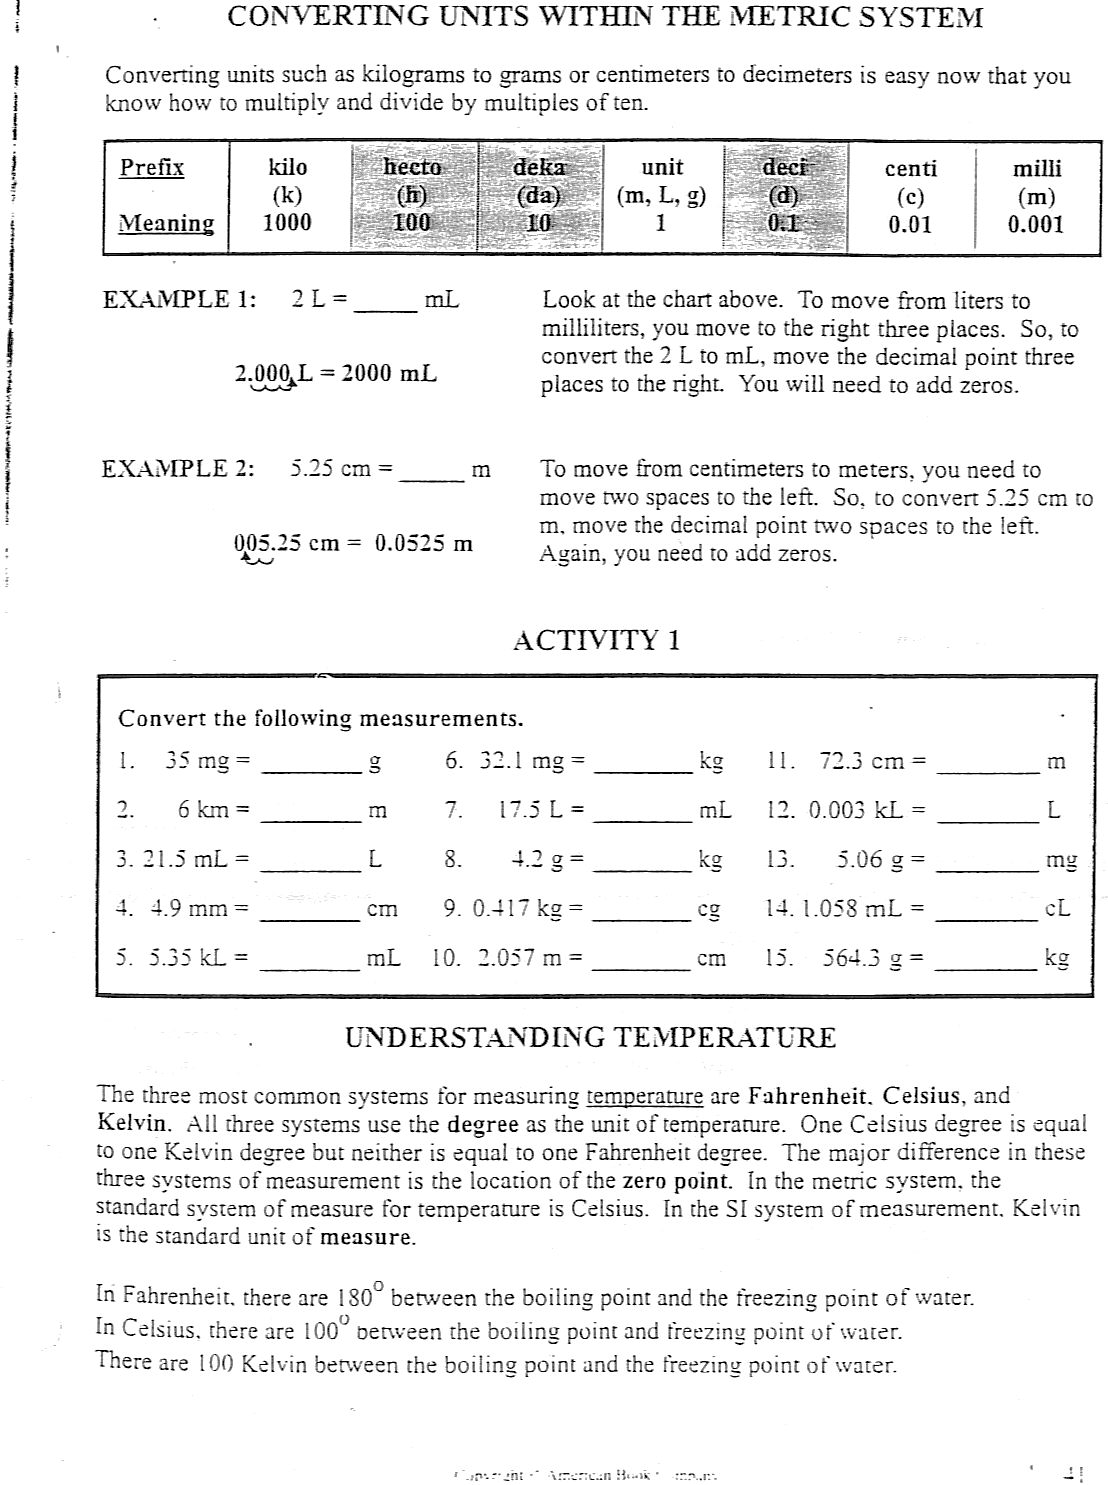 Converting Metric Units Worksheet Image